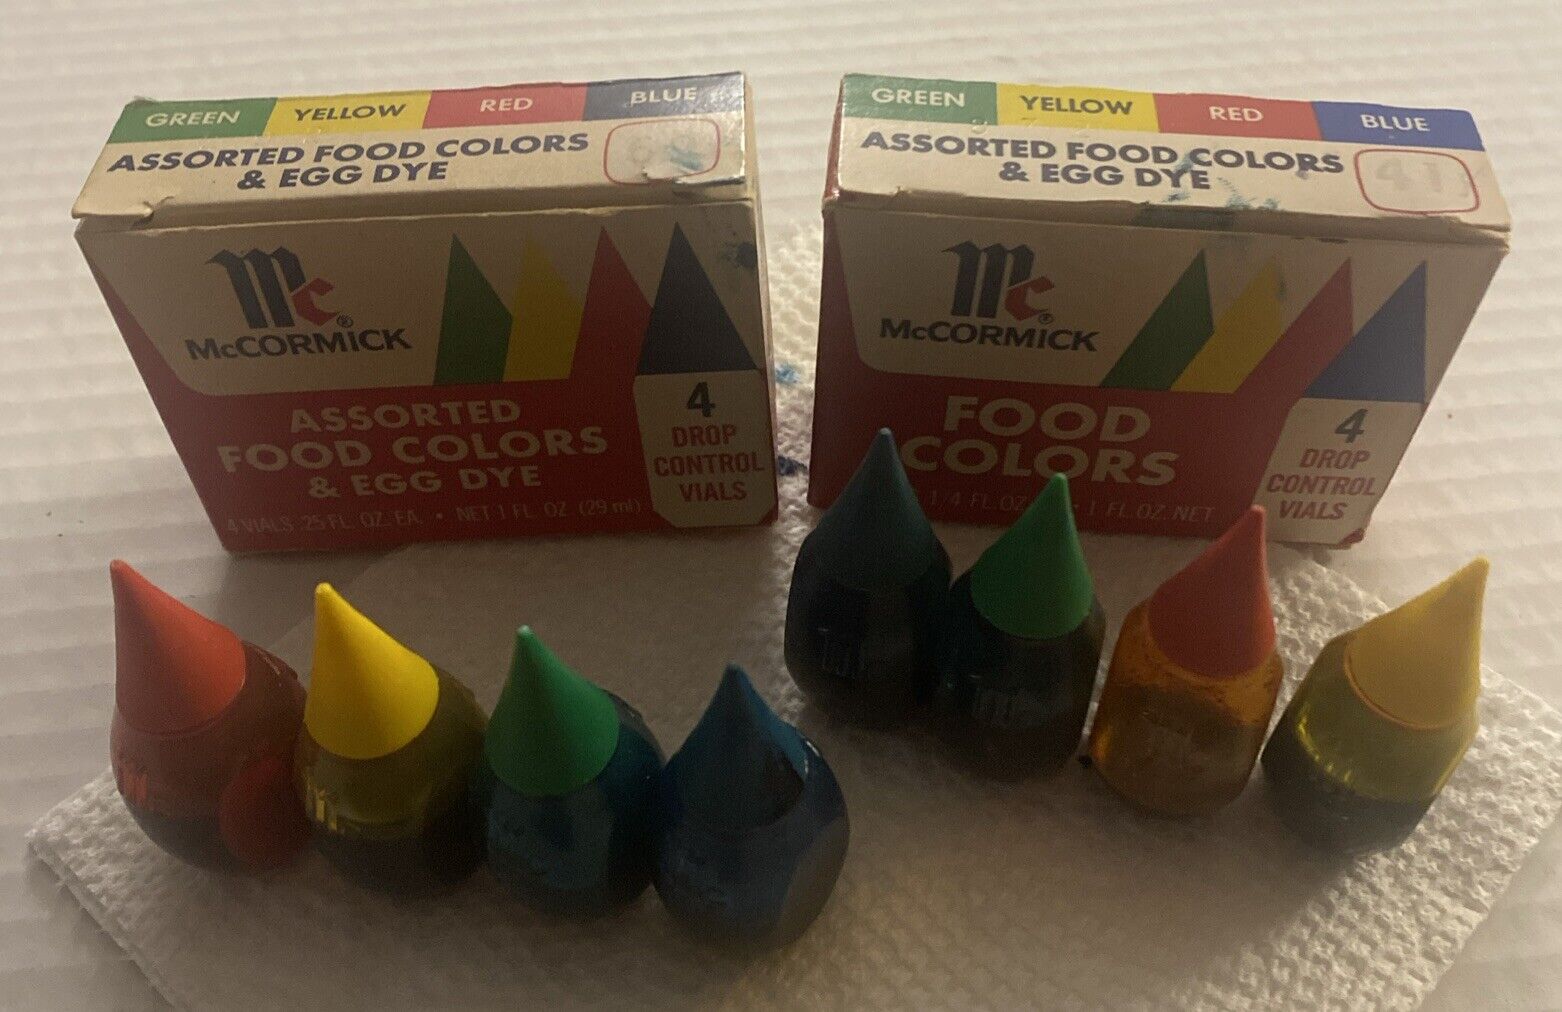 2 LOT McCormick Food Colors Egg Dye Boxes Bottles Vintage 1970s Advertising Prop